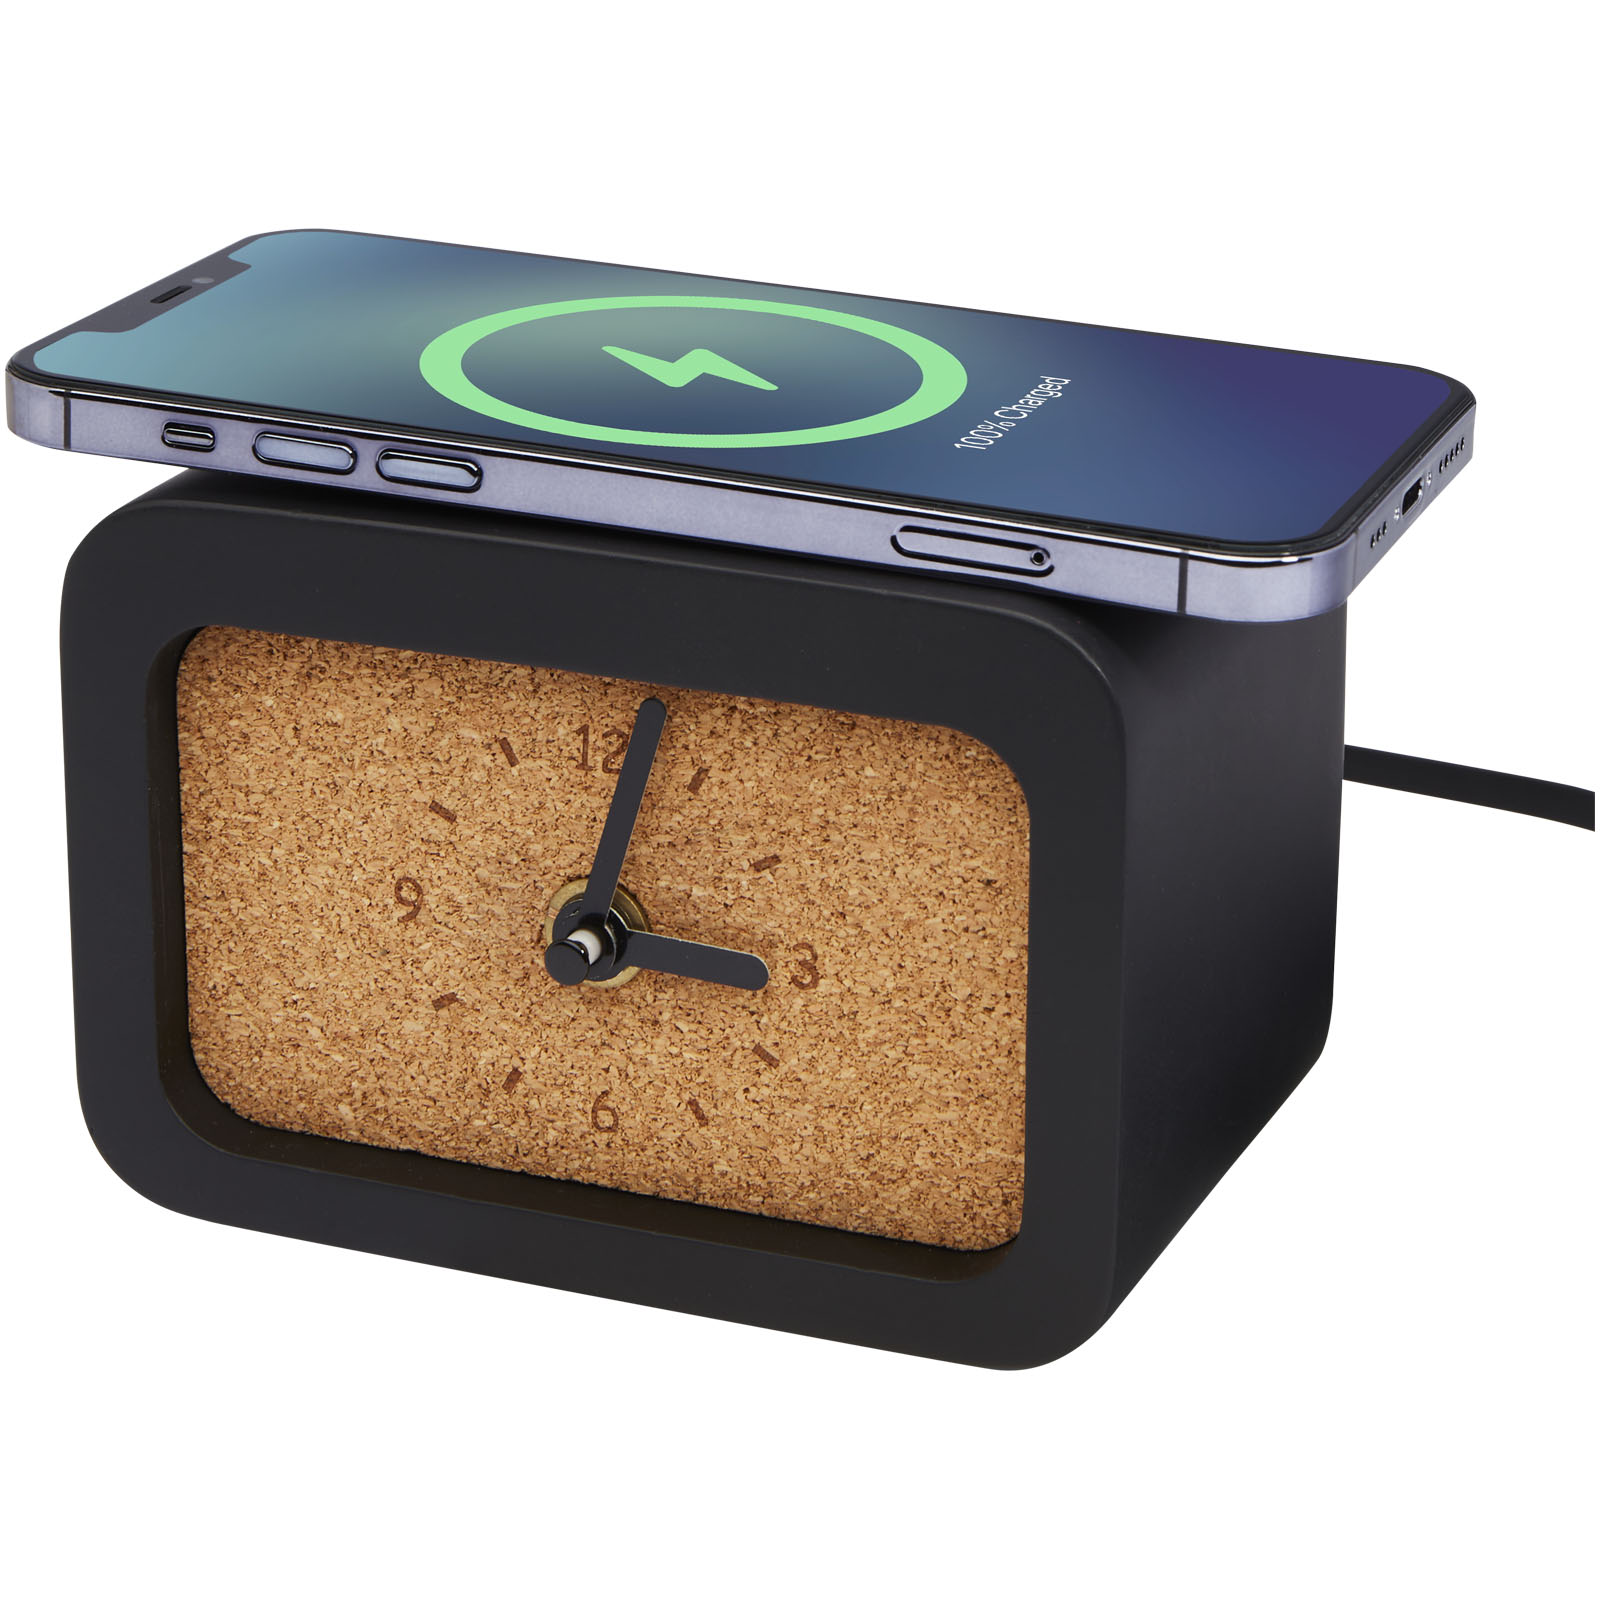 Advertising Wireless Charging - Momento wireless limestone charging desk clock - 3